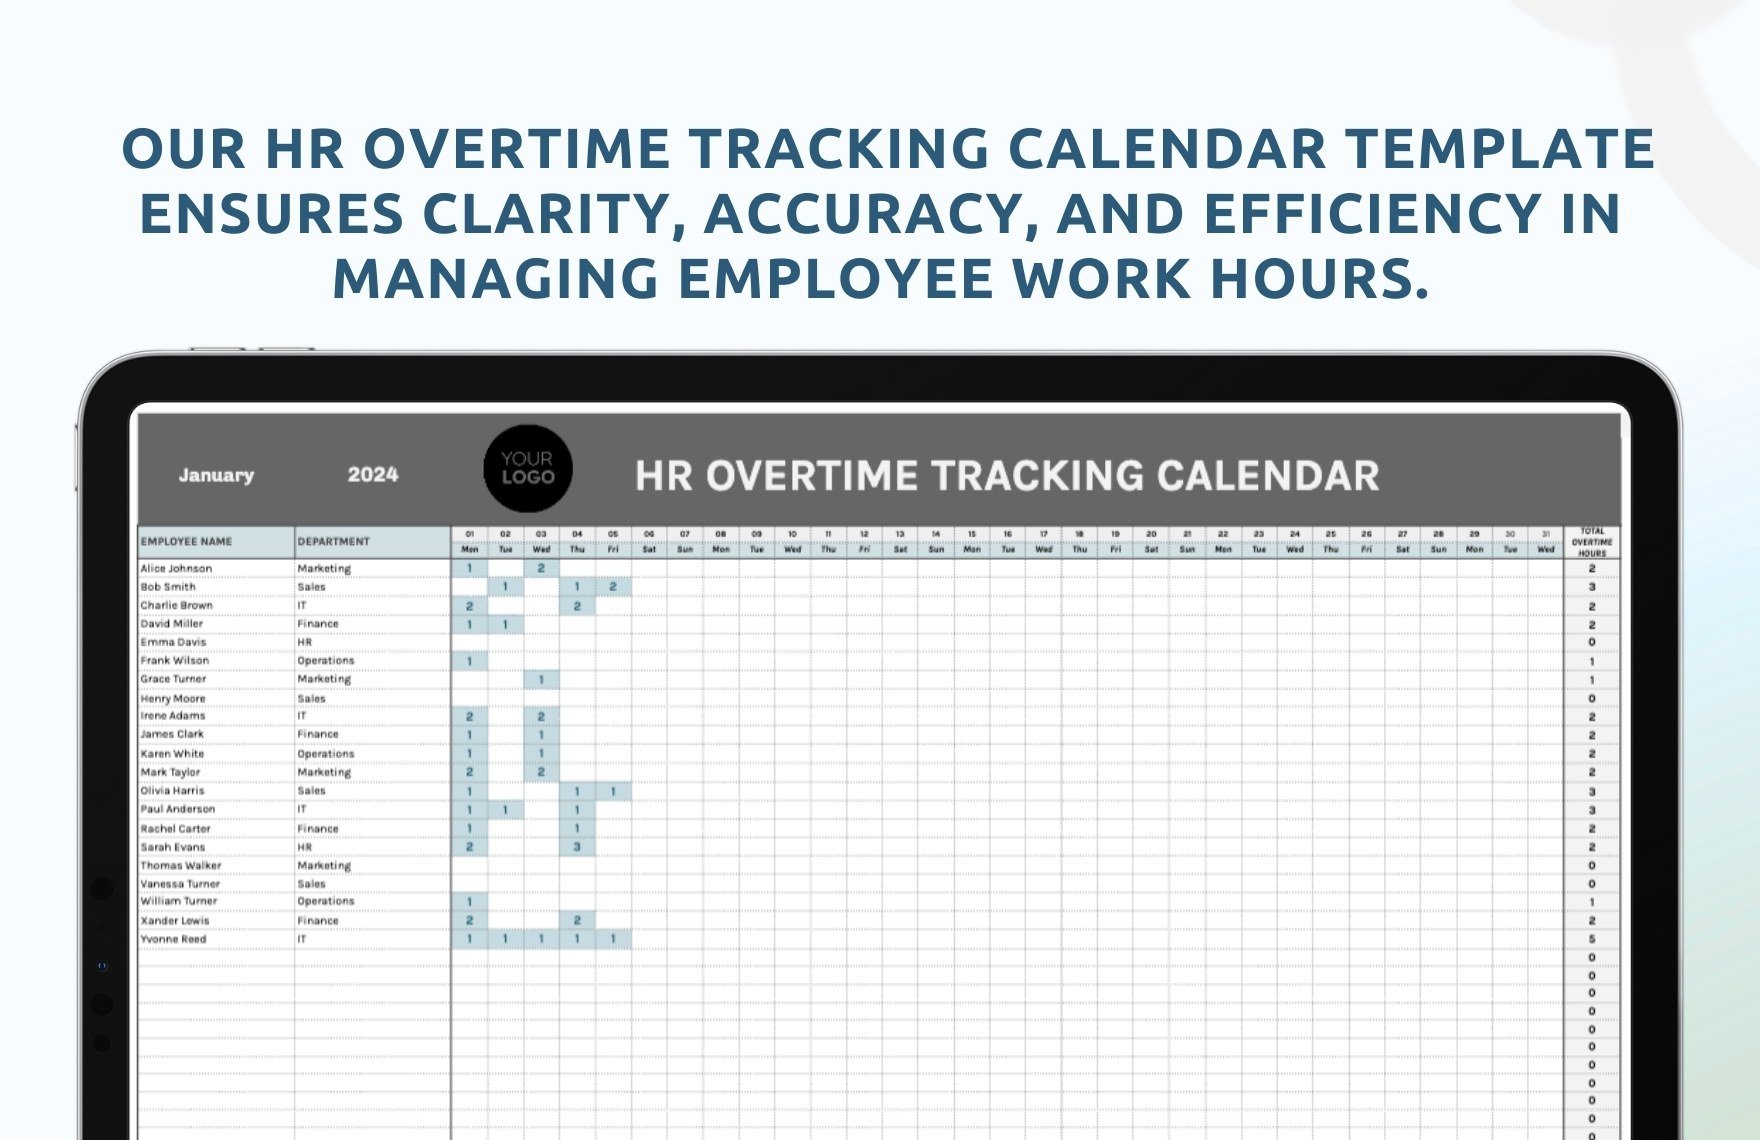 HR Overtime Tracking Calendar Template